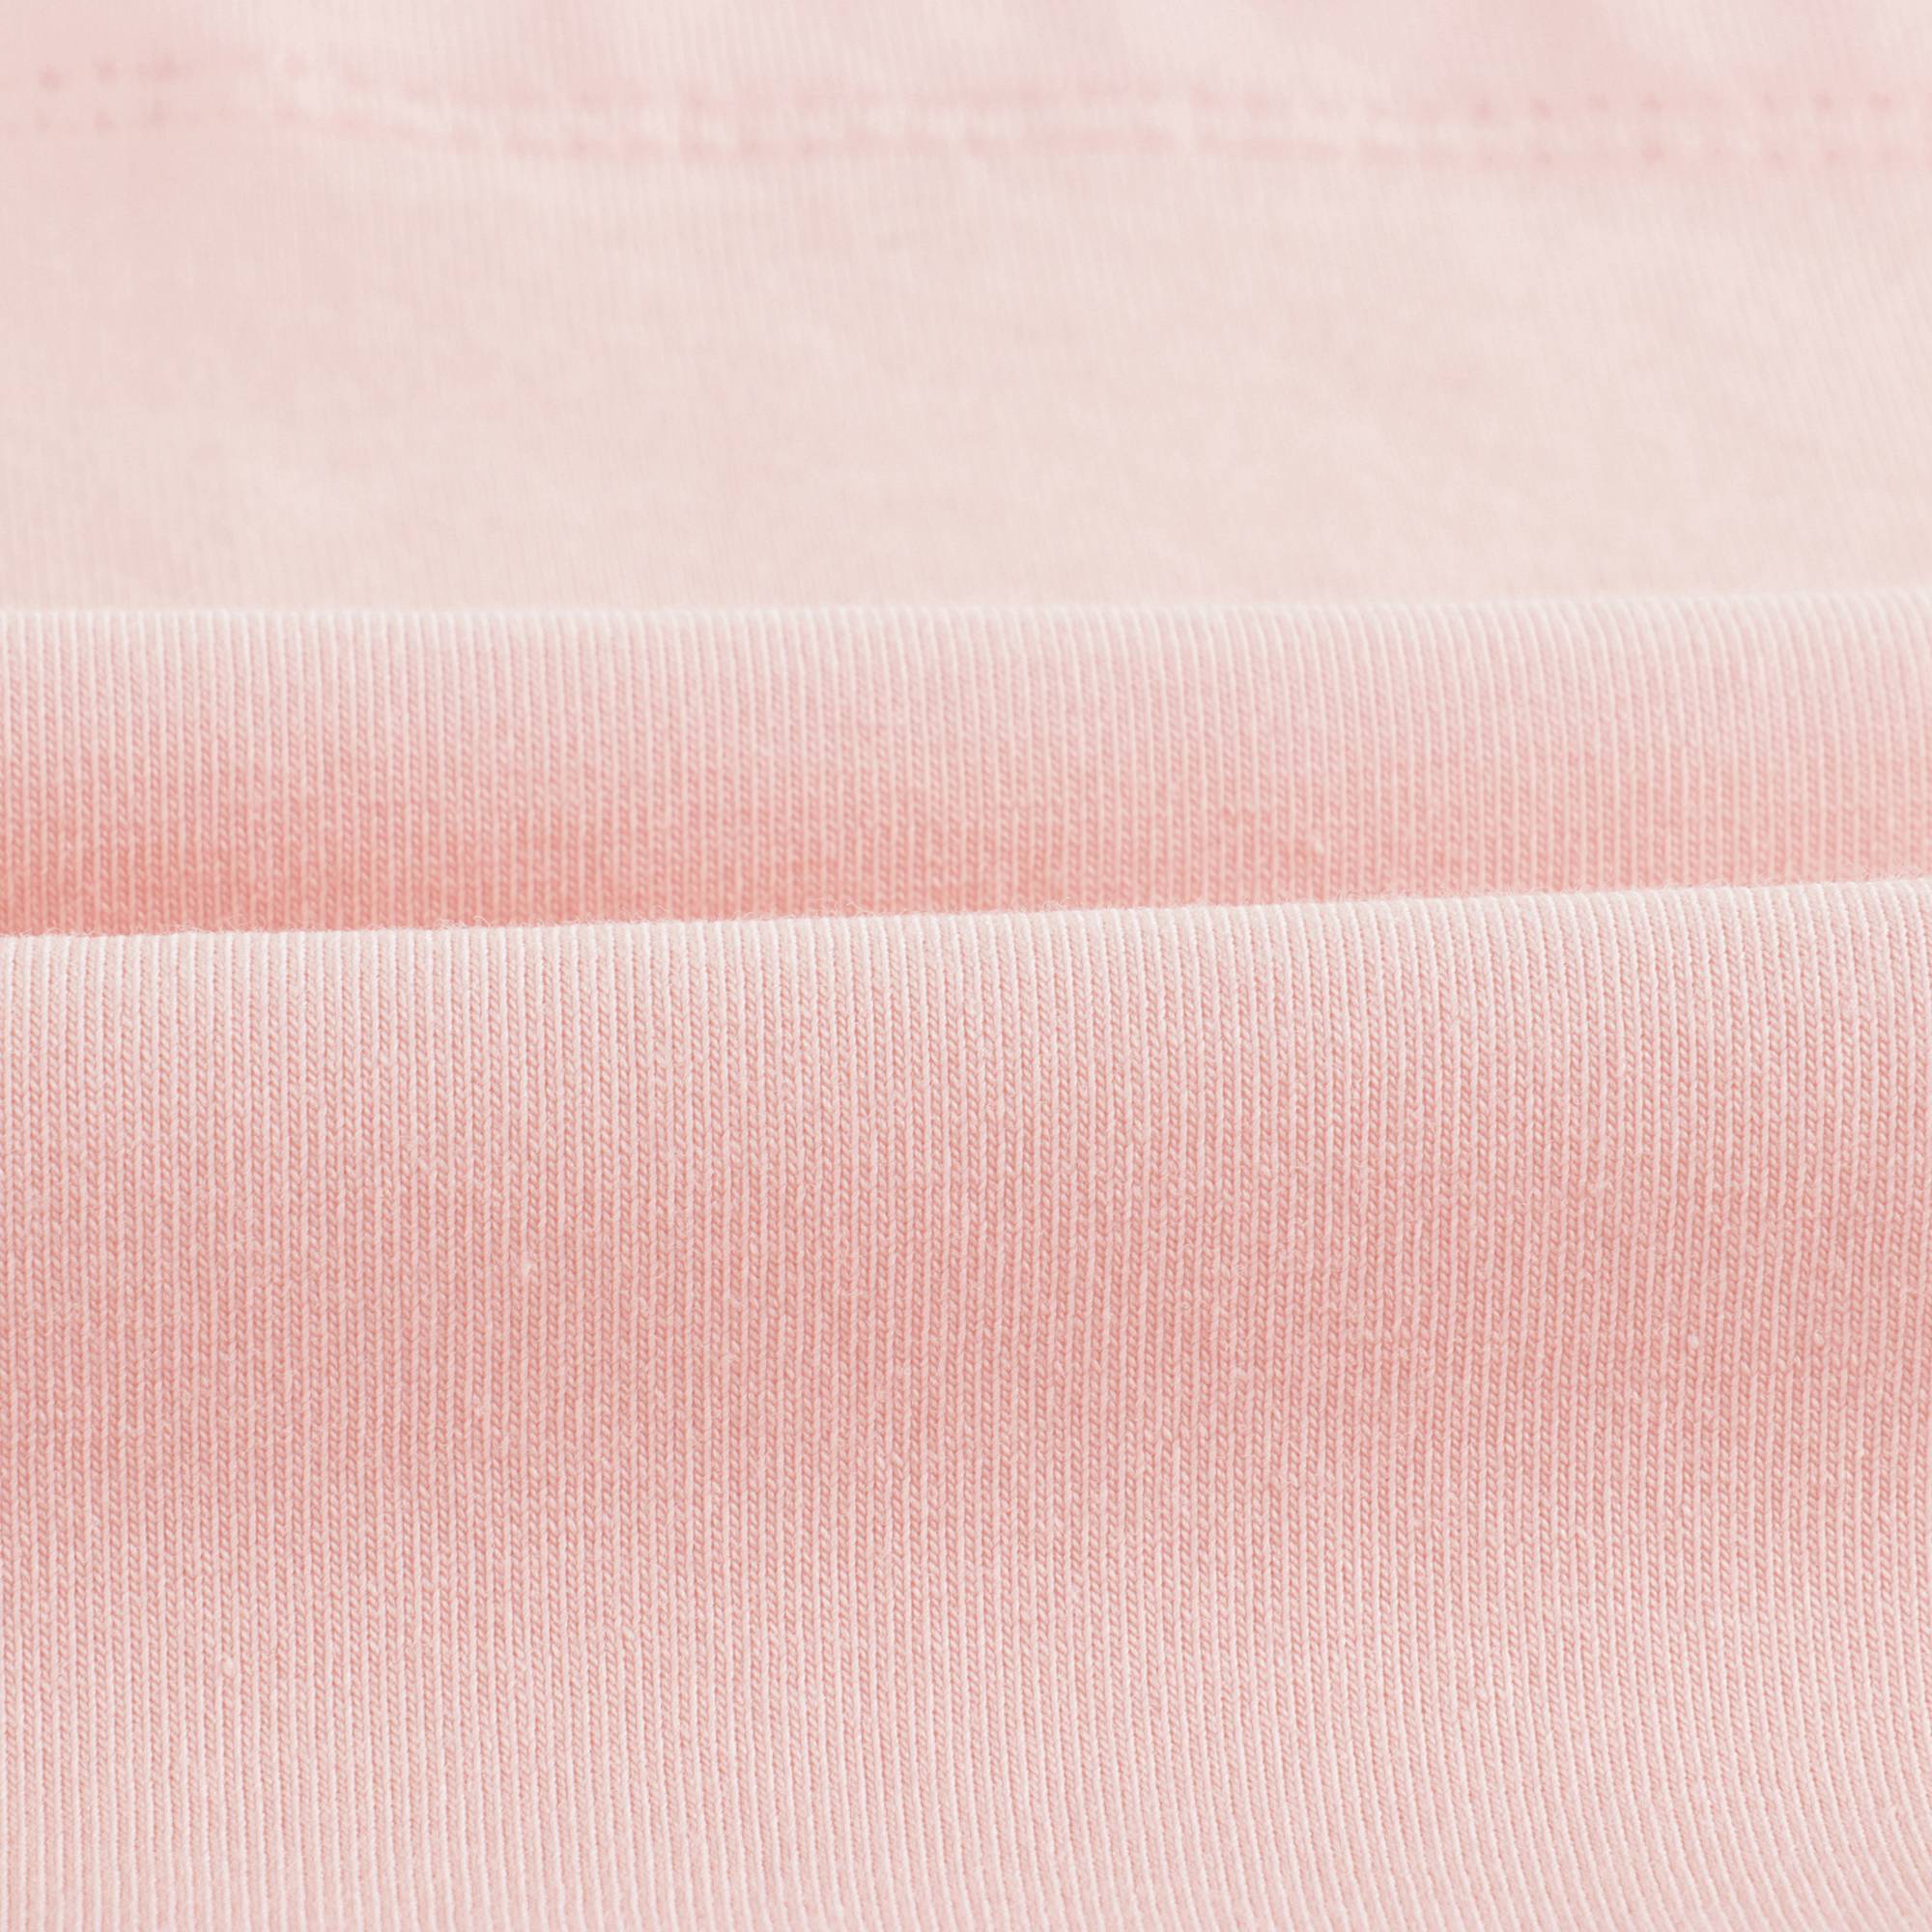 Baby Boys & Girls Pink Logo Cotton T-Shirt